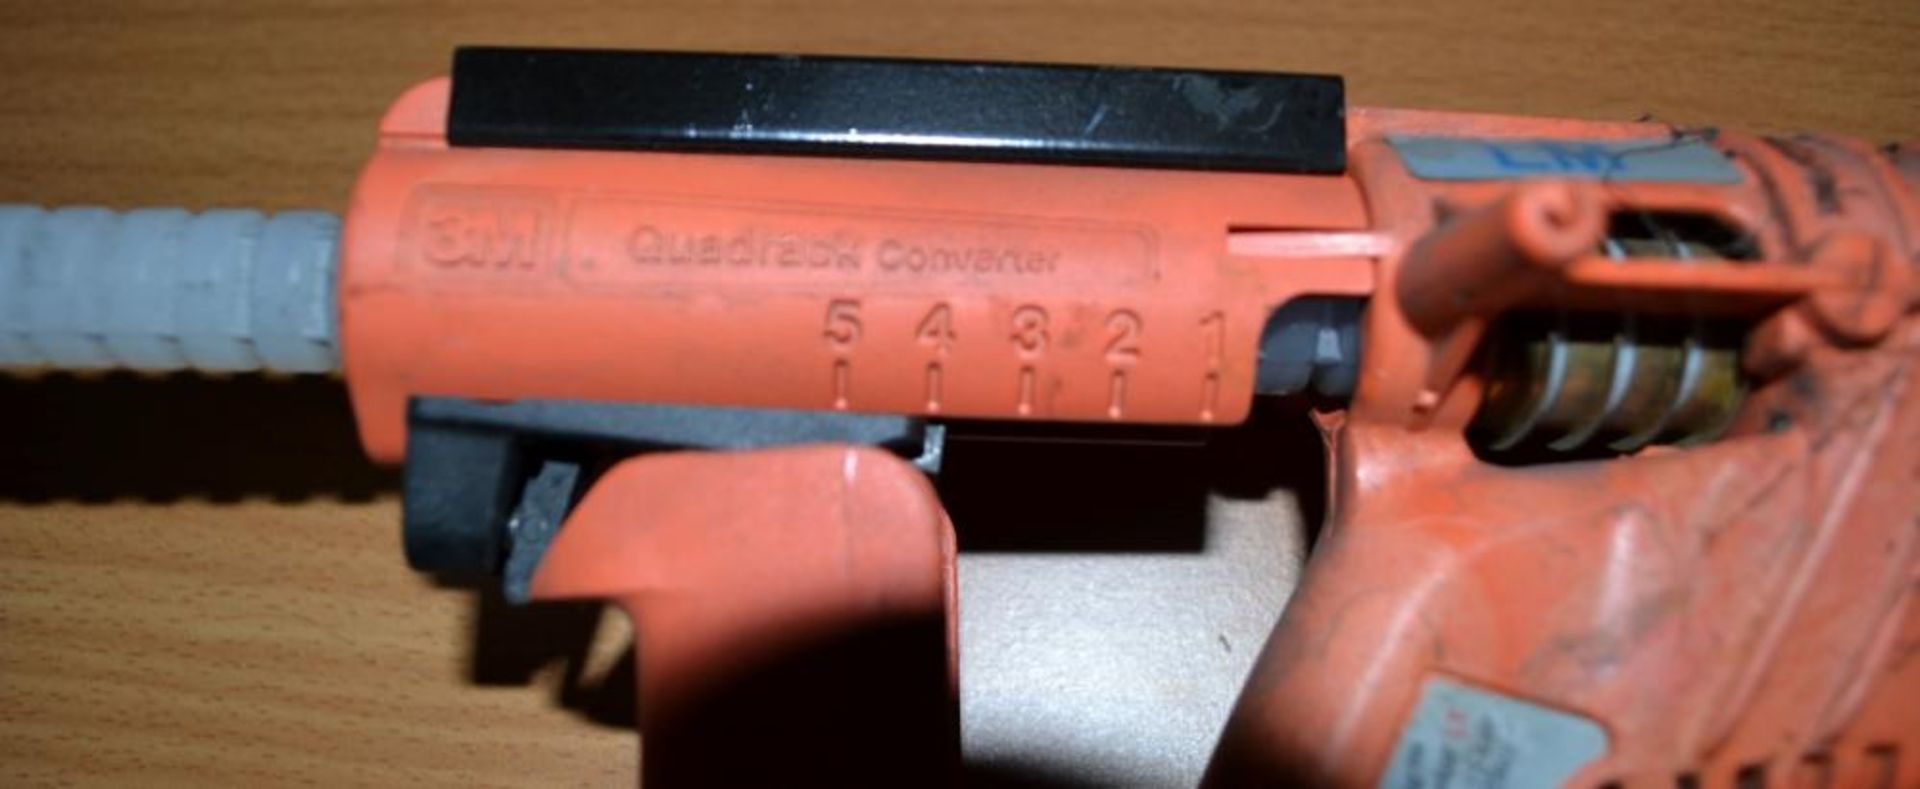 1 x 3M Scotch Weld Hot Melt Applicator with Quadrack Converter and Palm Trigger - CL185 - Ref: DRT06 - Image 9 of 11